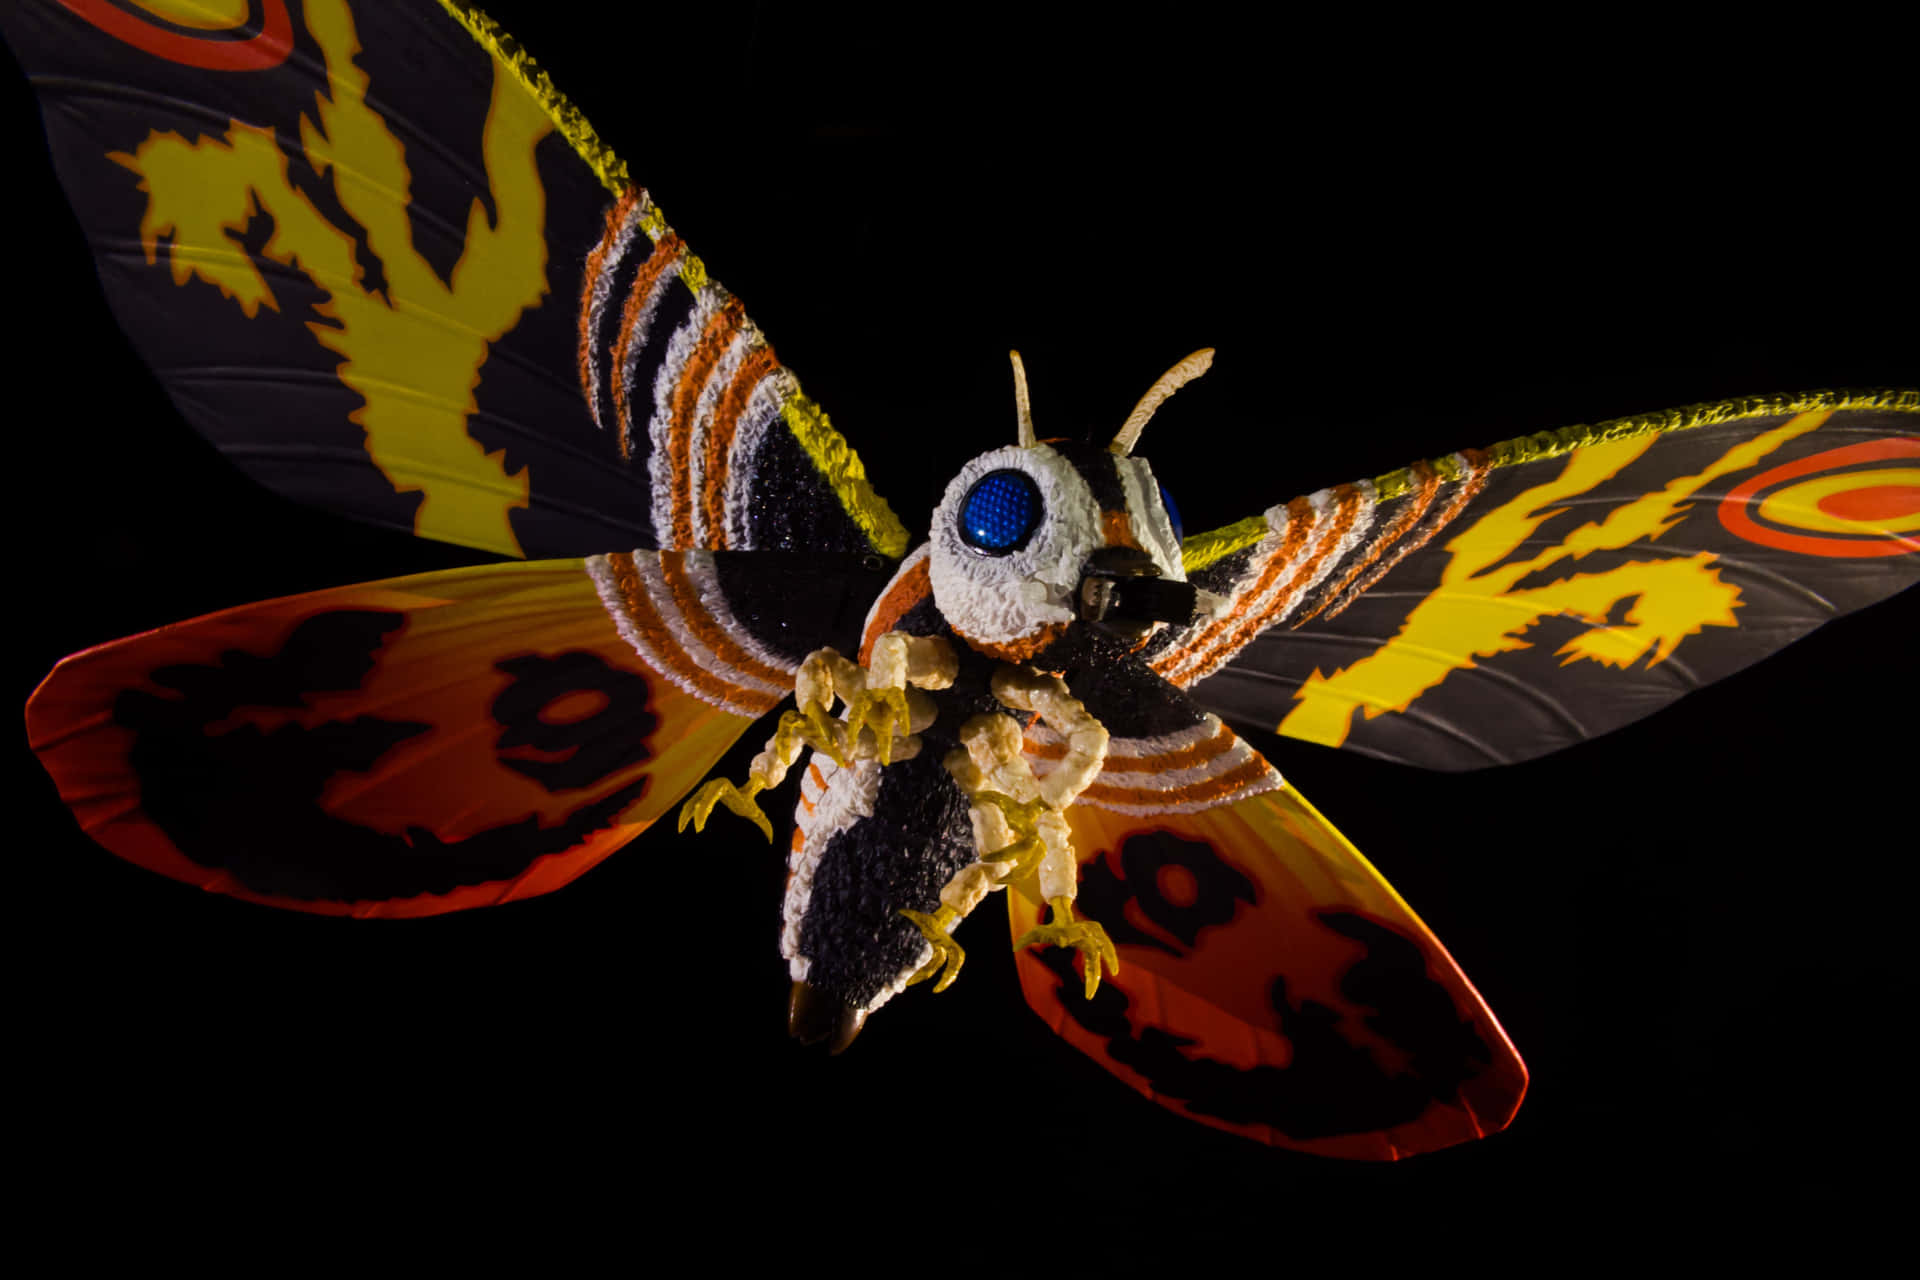 Majestic Mothra soaring through the night sky Wallpaper